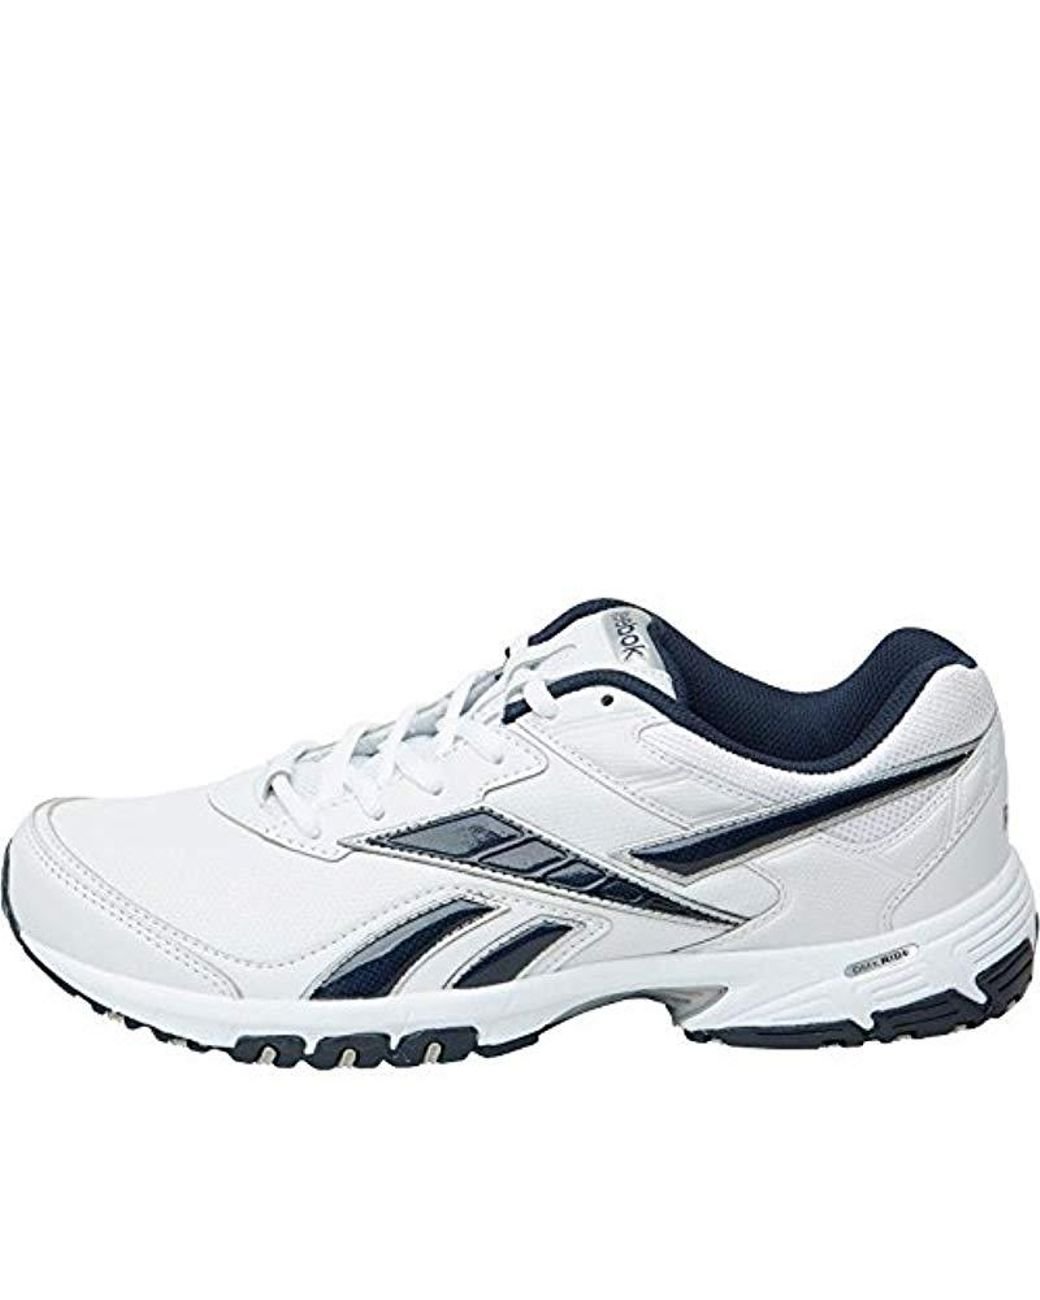 Reebok S Neche Dmx Ride Training Shoes White/navy/silver.uk 6 Eu 39 for Men  | Lyst UK